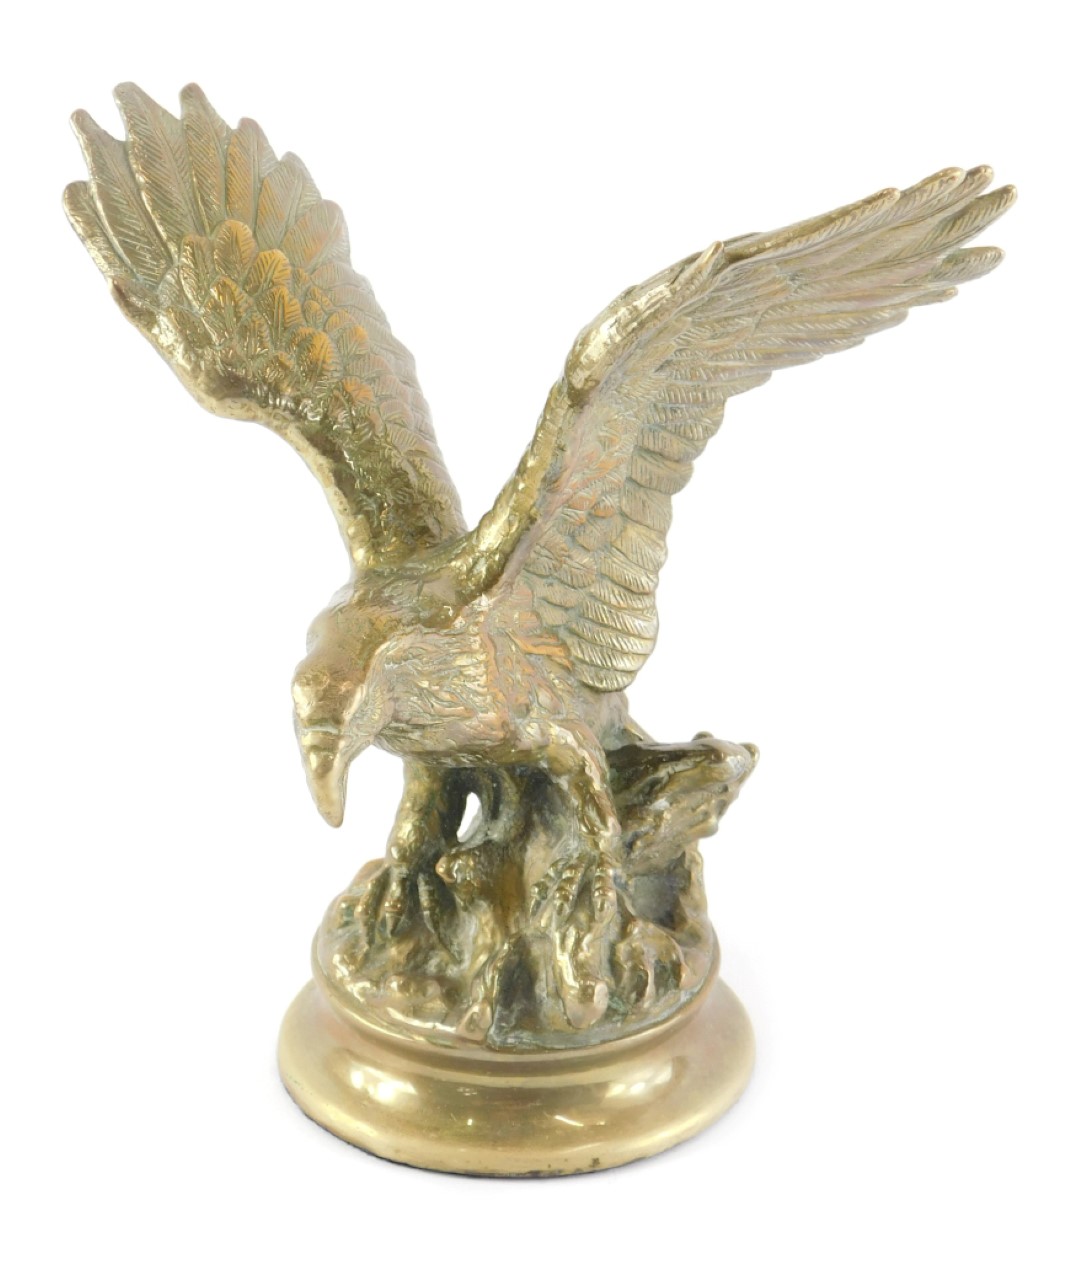 A brass model of an eagle, on a circular base, 25cm high.